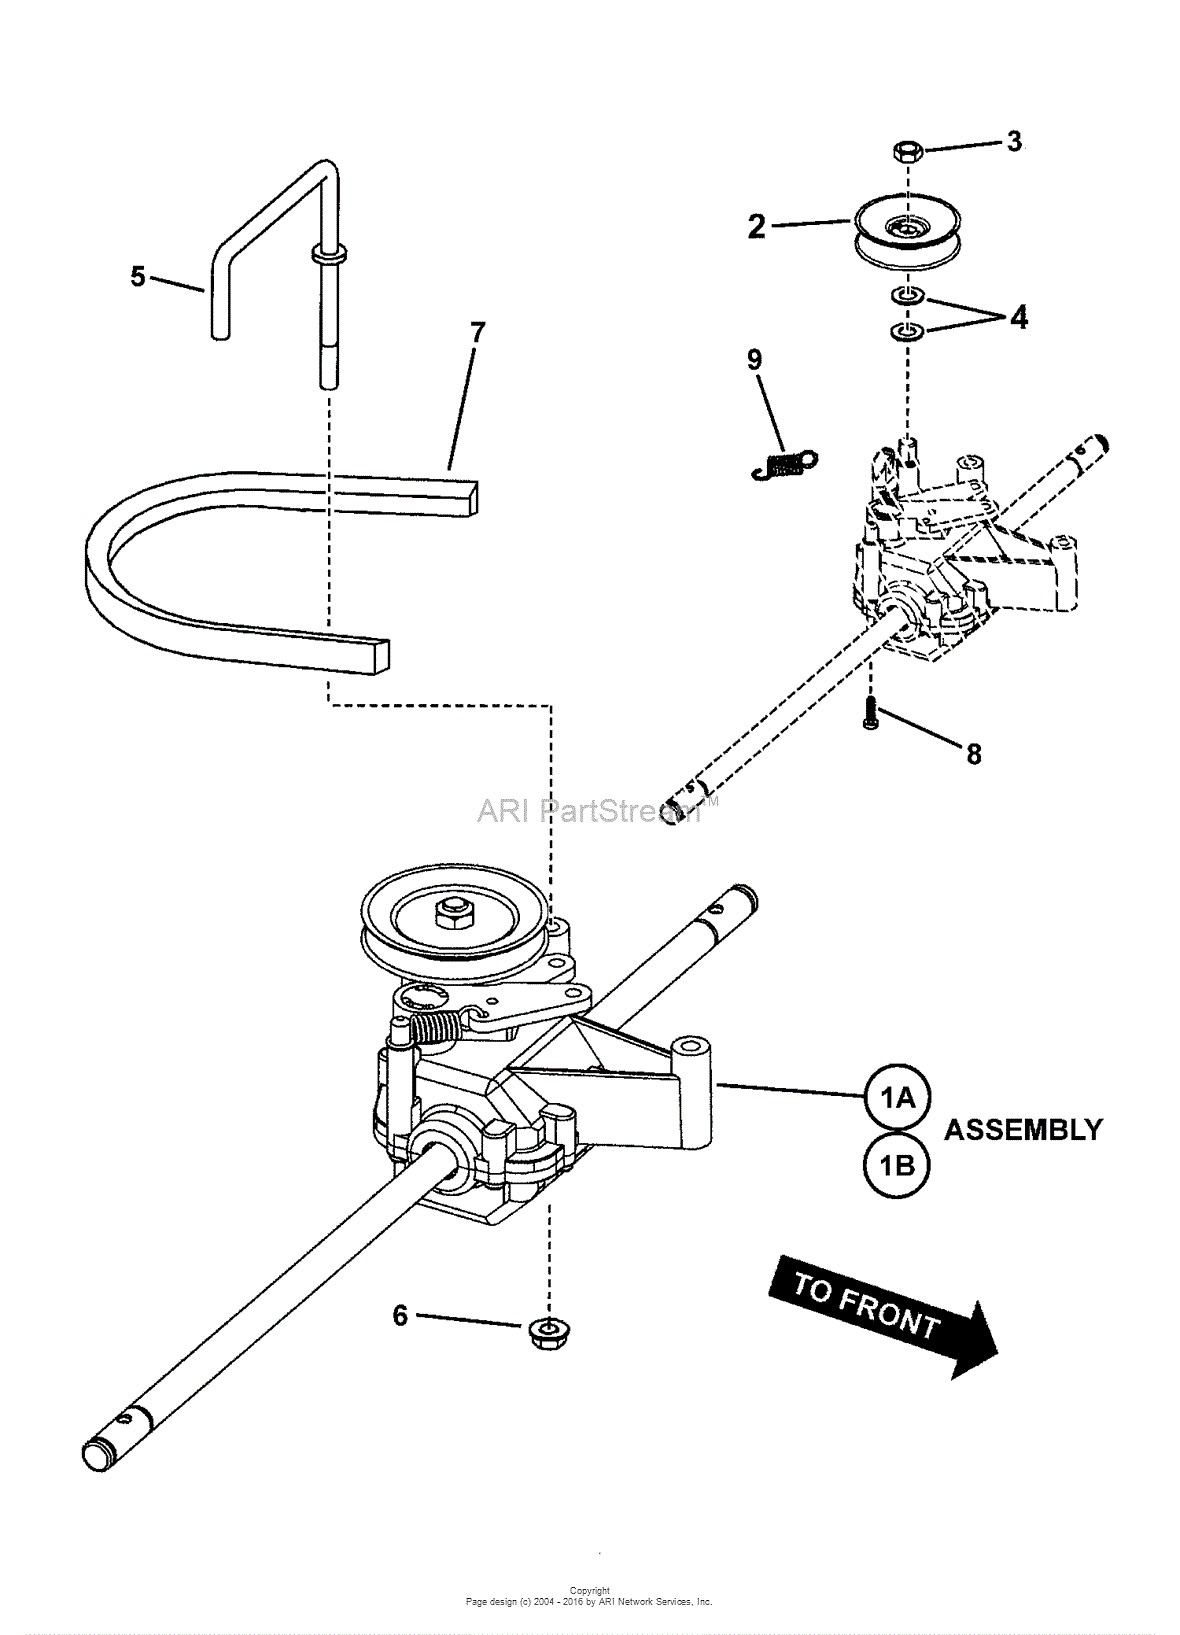 Honda 6 5 Hp Engine Parts Diagram Snapper Spv21 21" 6 5 Hp Steel Deck Easy Line Walk Mower Of Honda 6 5 Hp Engine Parts Diagram